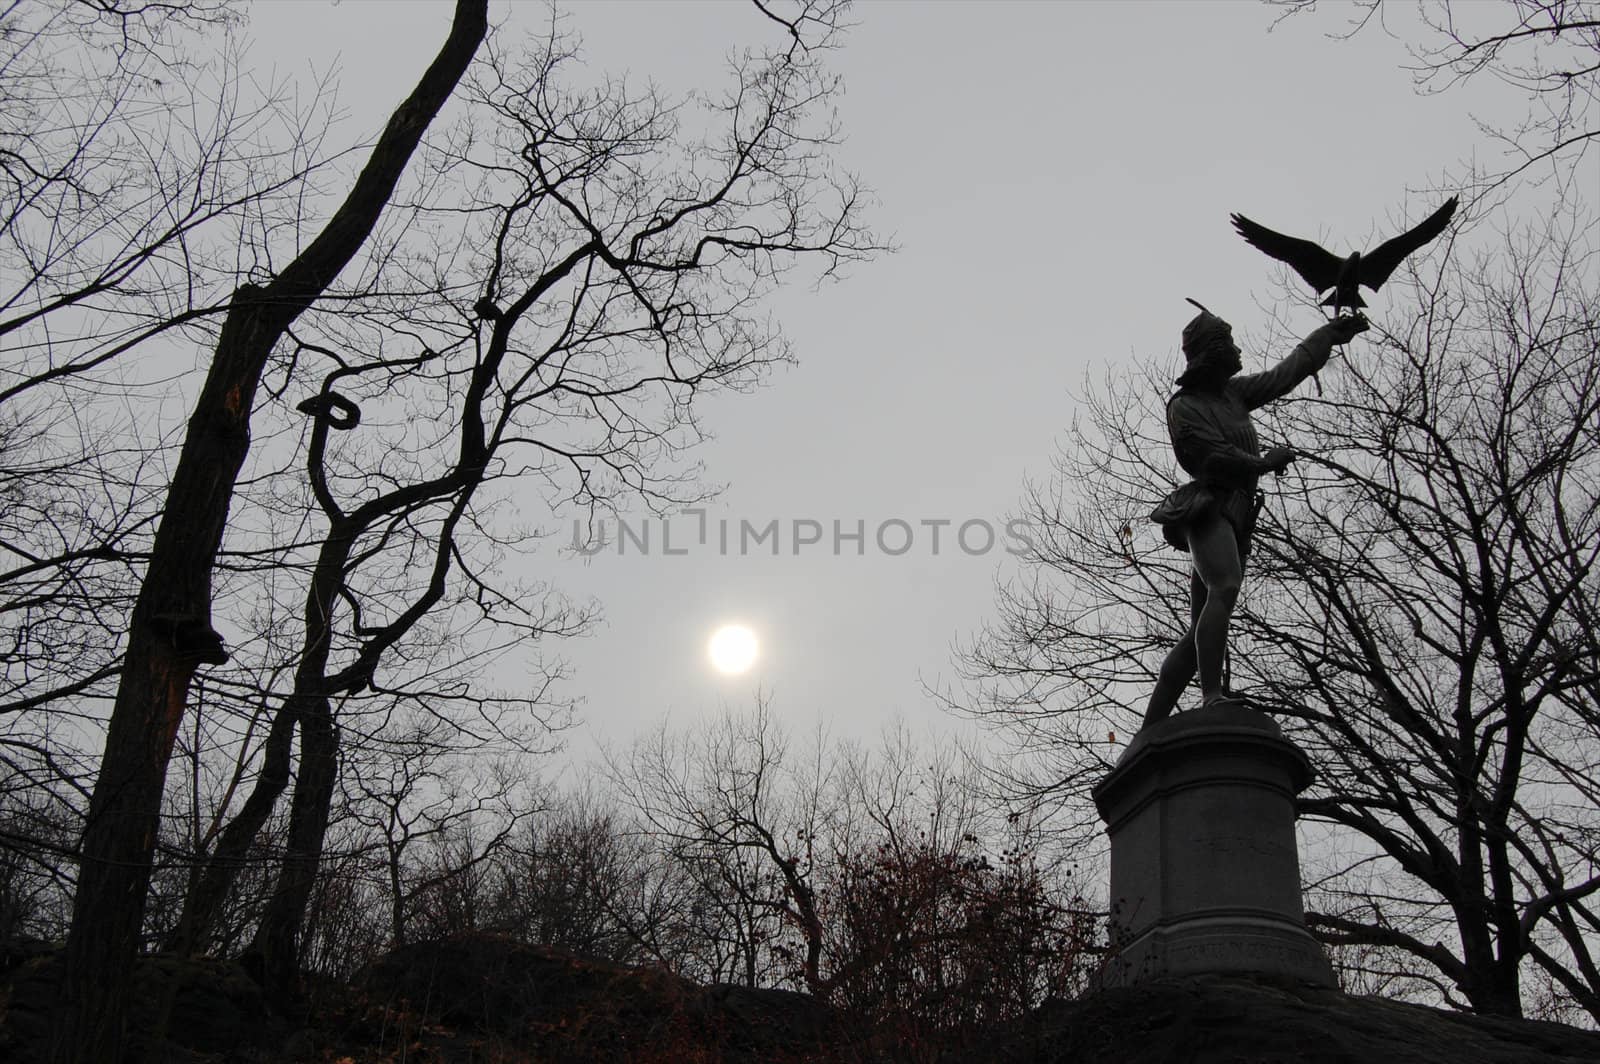 The Falconer, Central Park by tyroneburkemedia@gmail.com